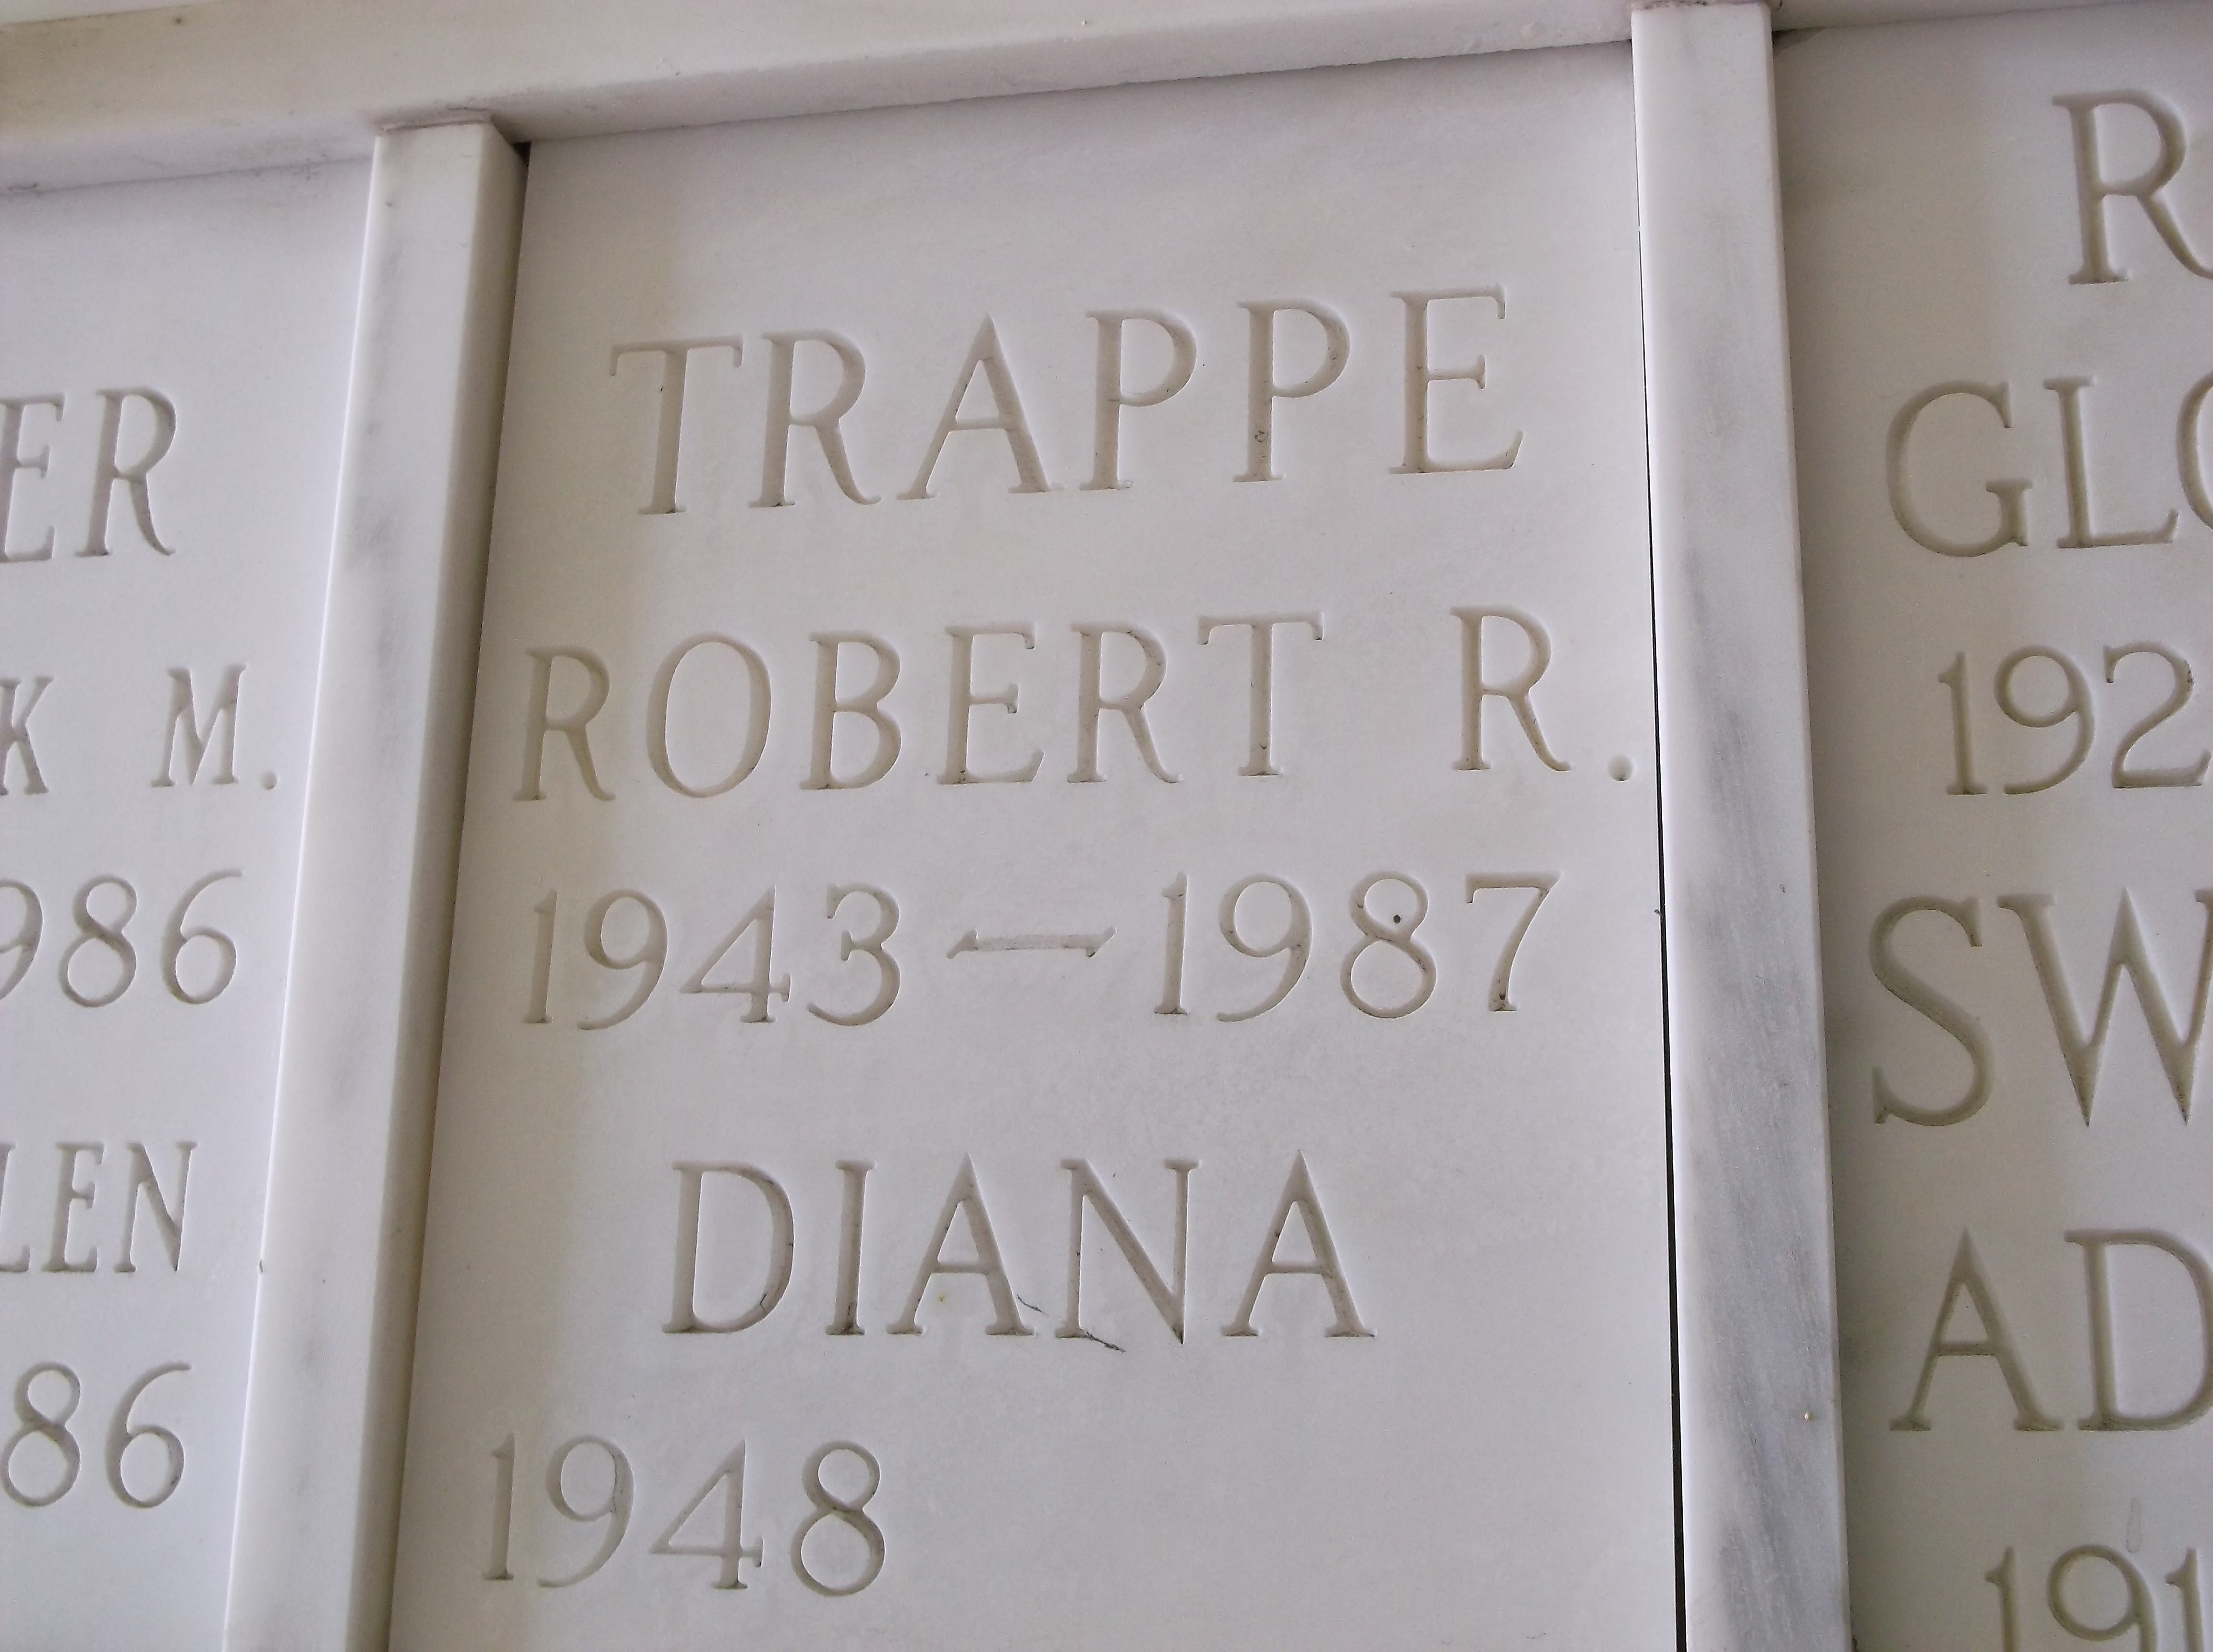 Robert R Trappe